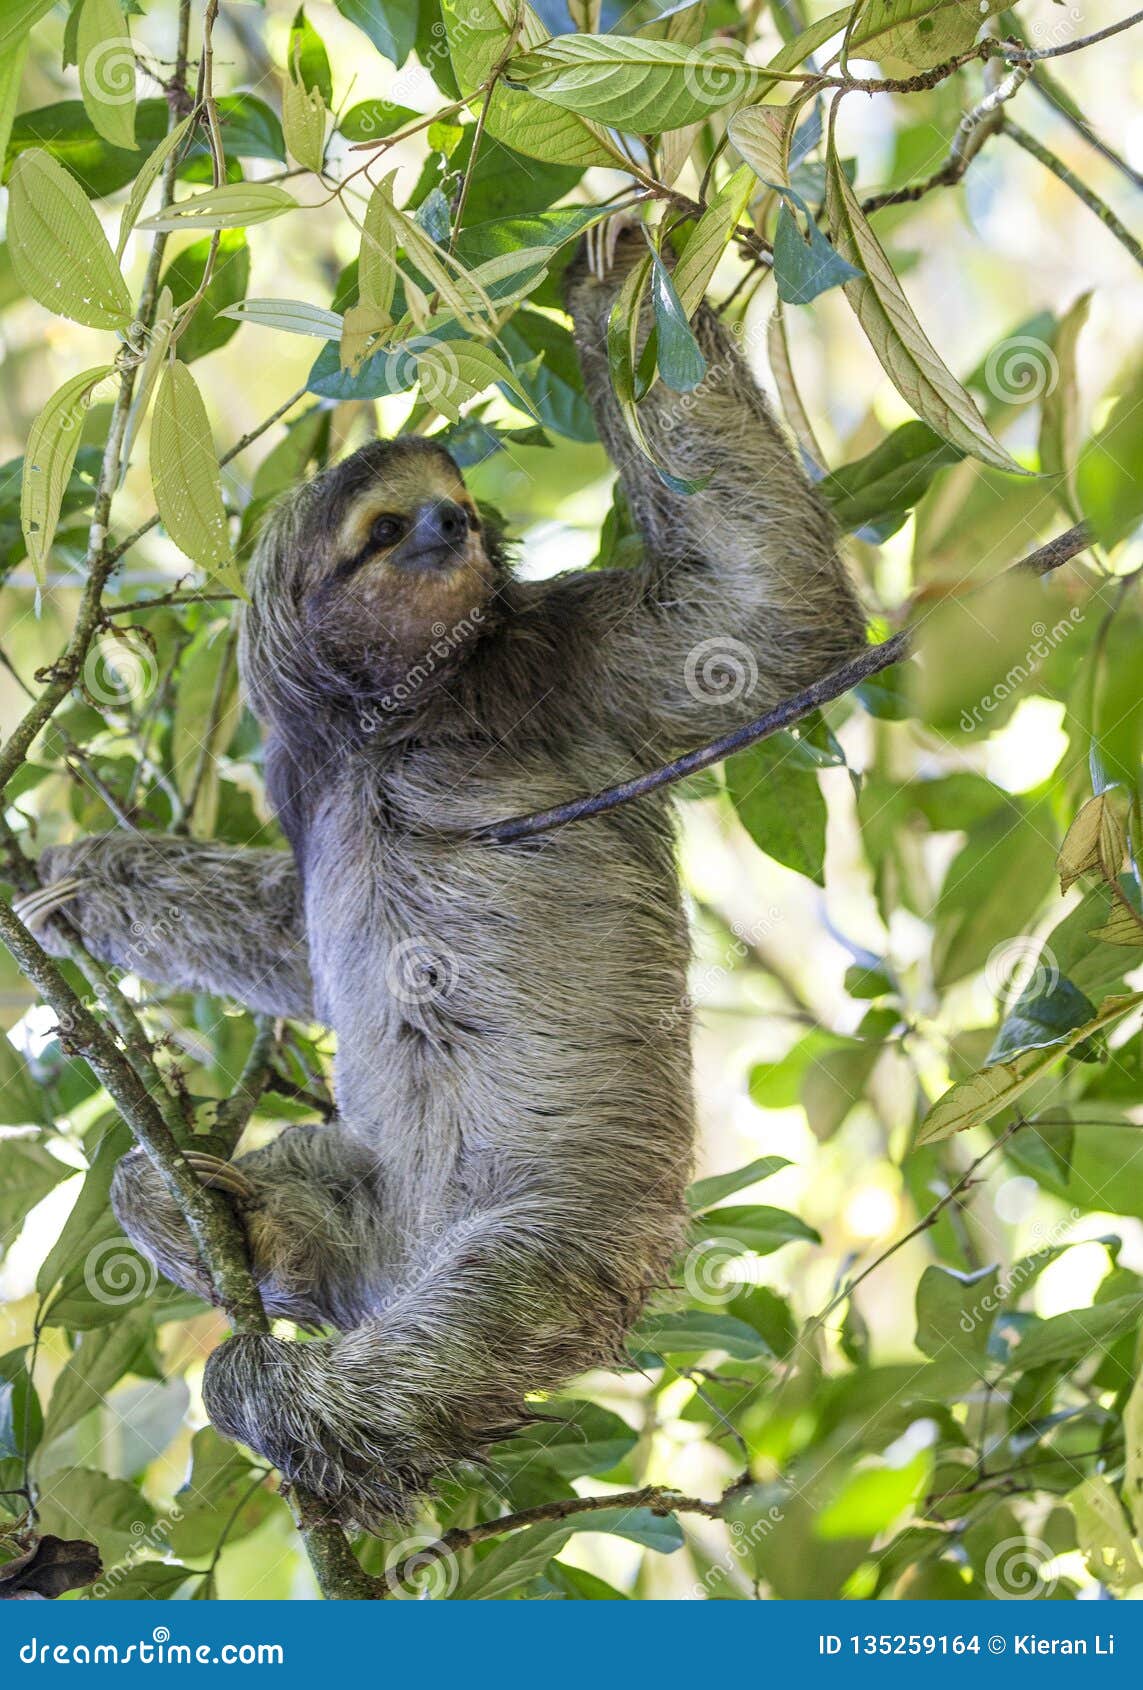 brown-throated sloth bradypus variegatus